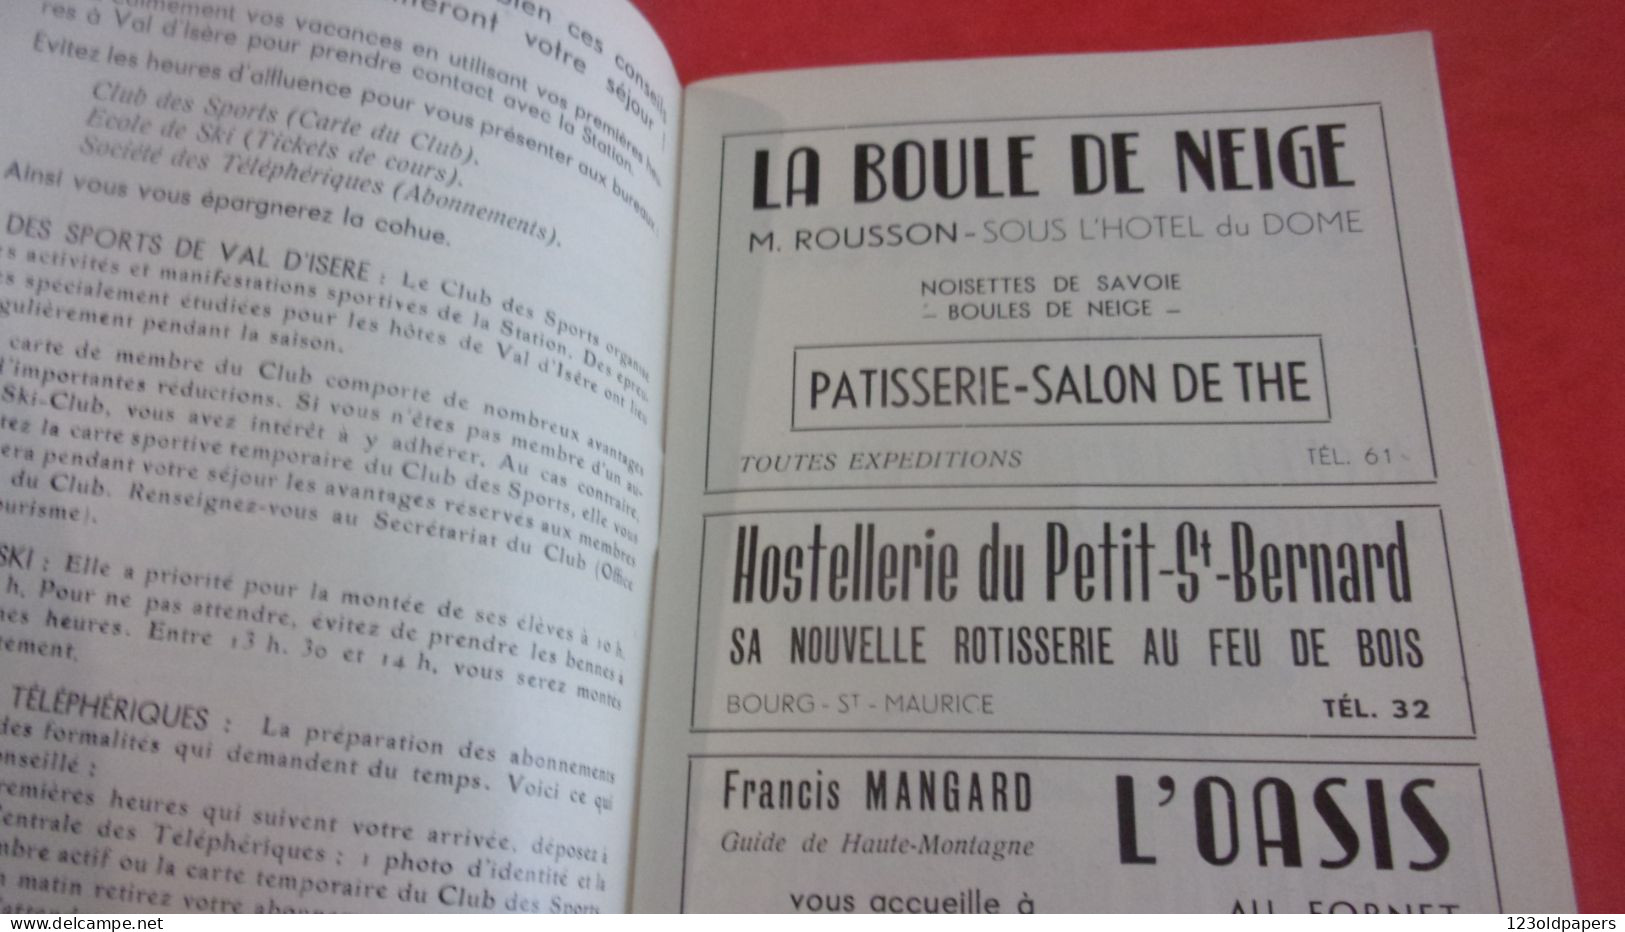 DEPLIANT  1960 MARS LA SEMAINE A VAL D ISERE - Toeristische Brochures